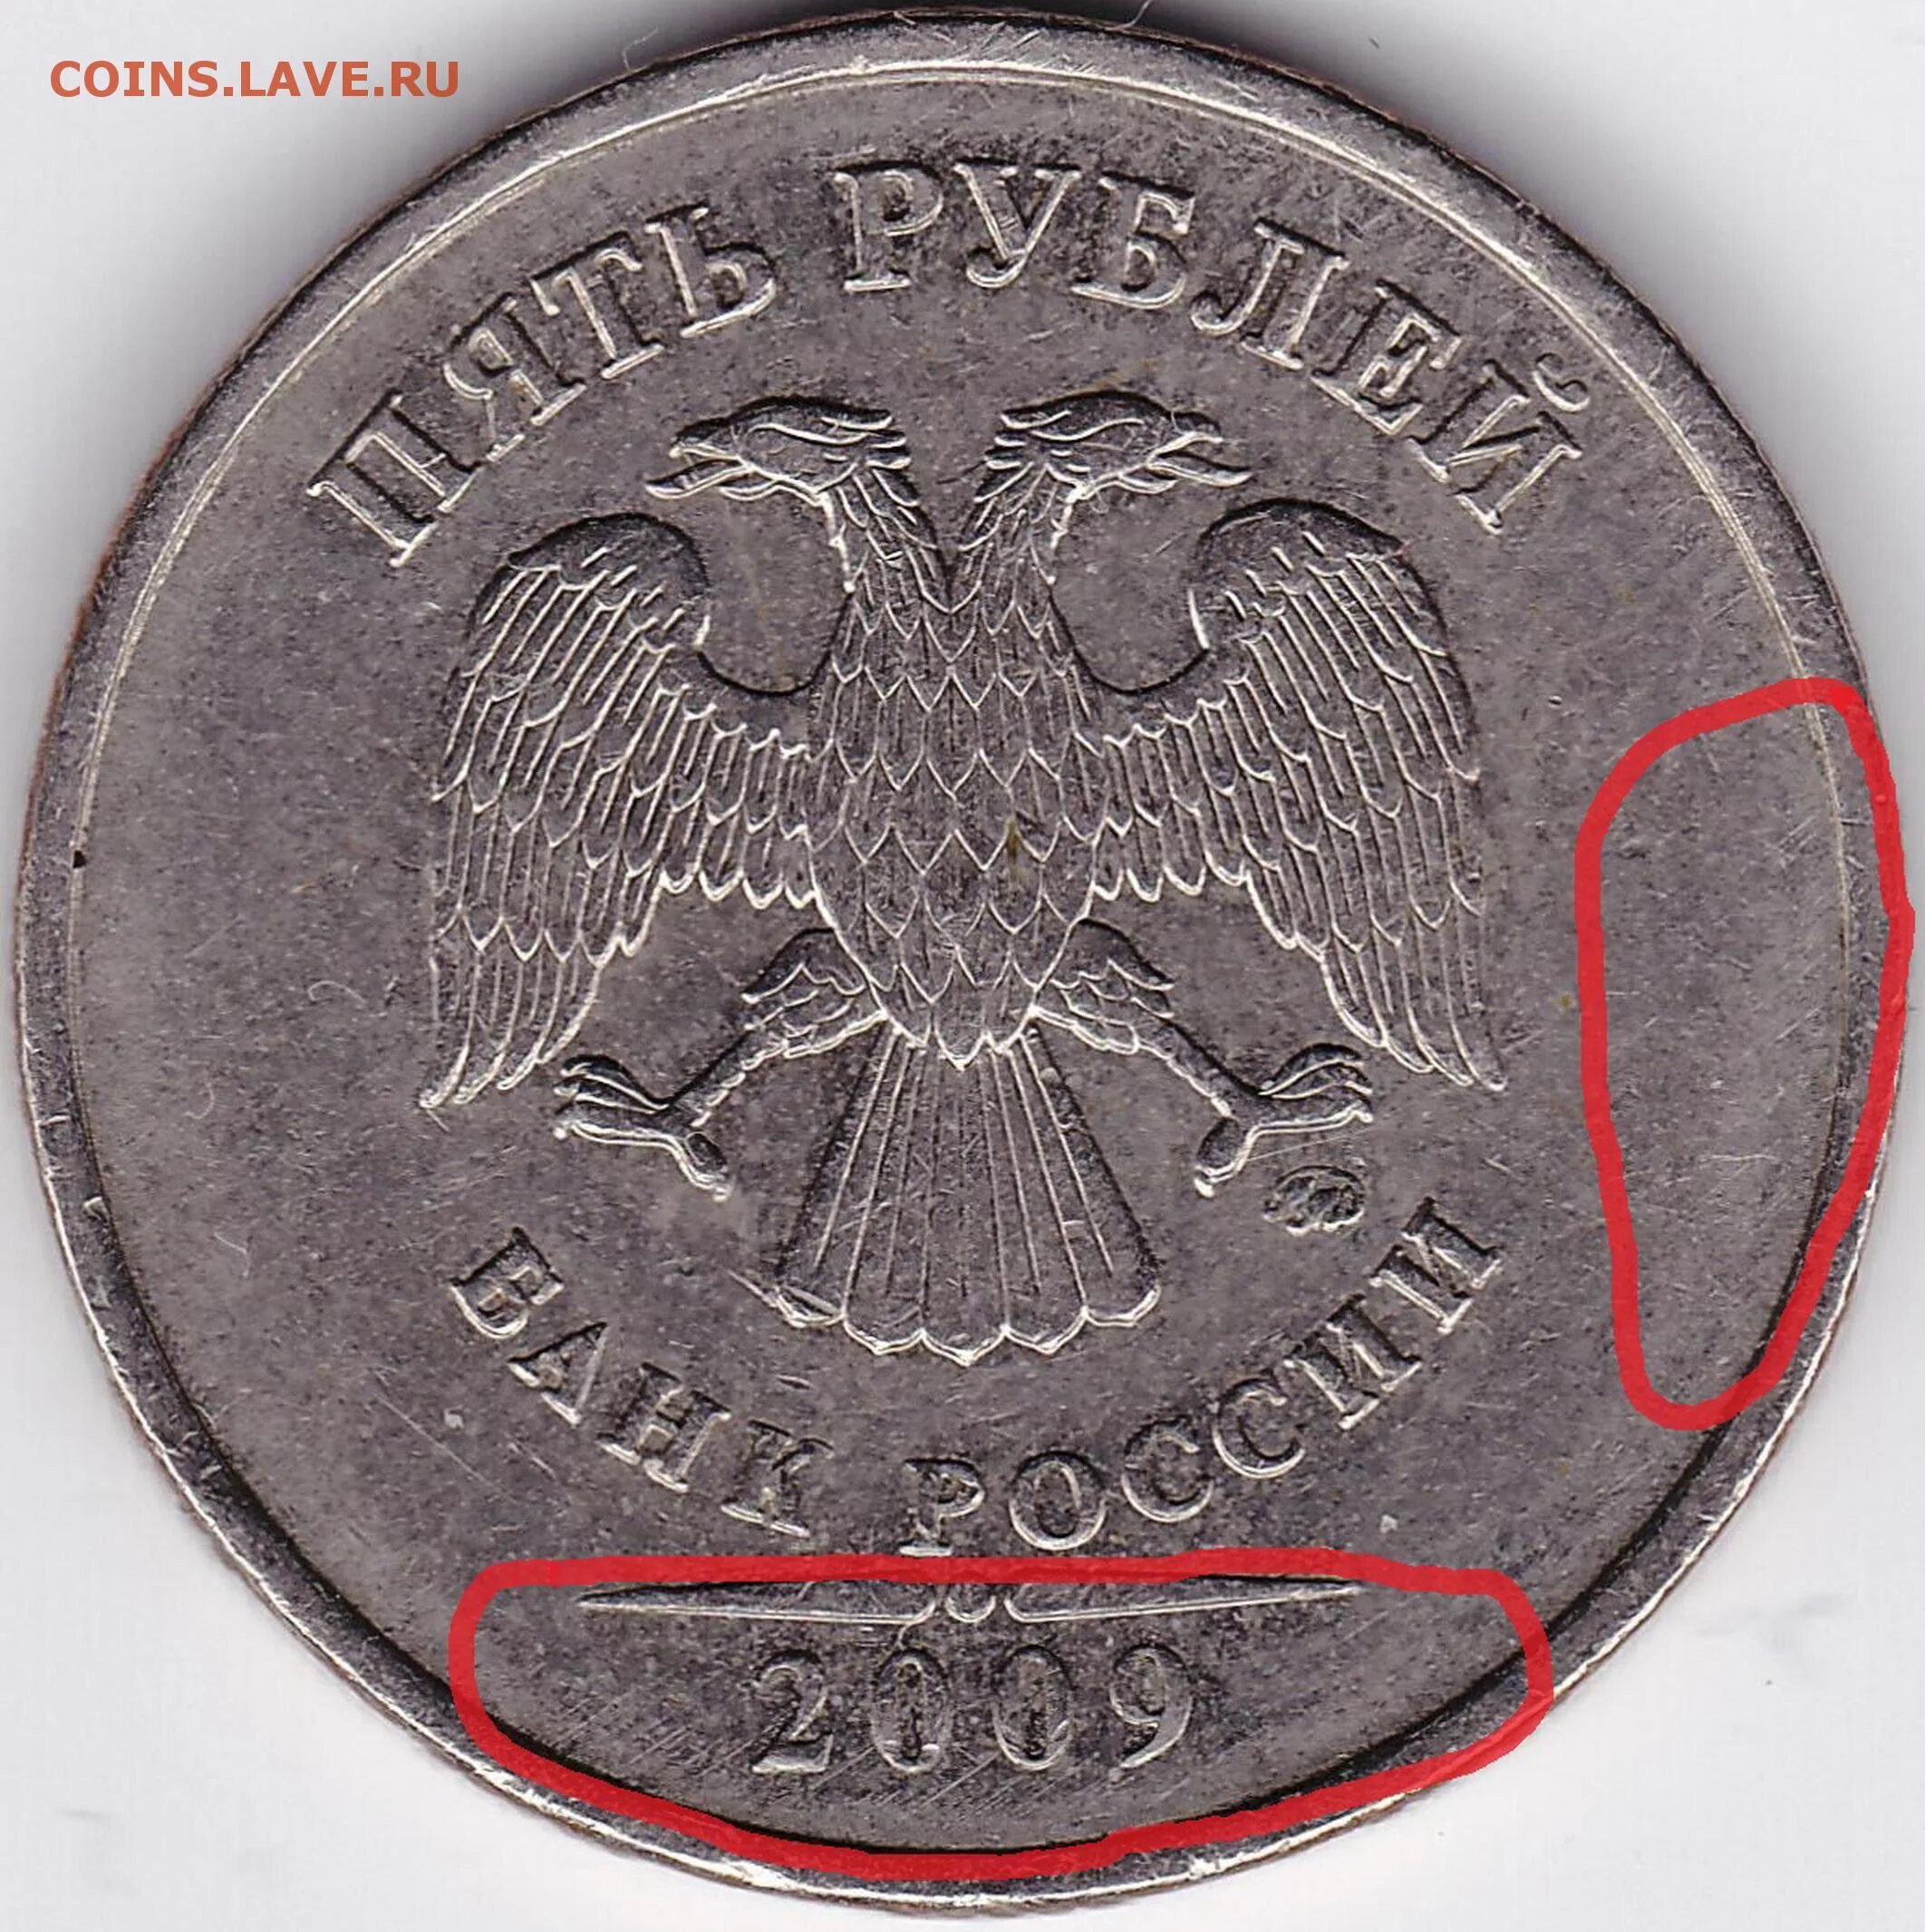 5 рублей 2009 ммд. 5 Рублей 2009 ММД немагнитная. 1 Рубль 2009 ММД (немагнитная). 5 Рублей 2009 года немагнитные. Немагнитный 5 рубль немагнитная.